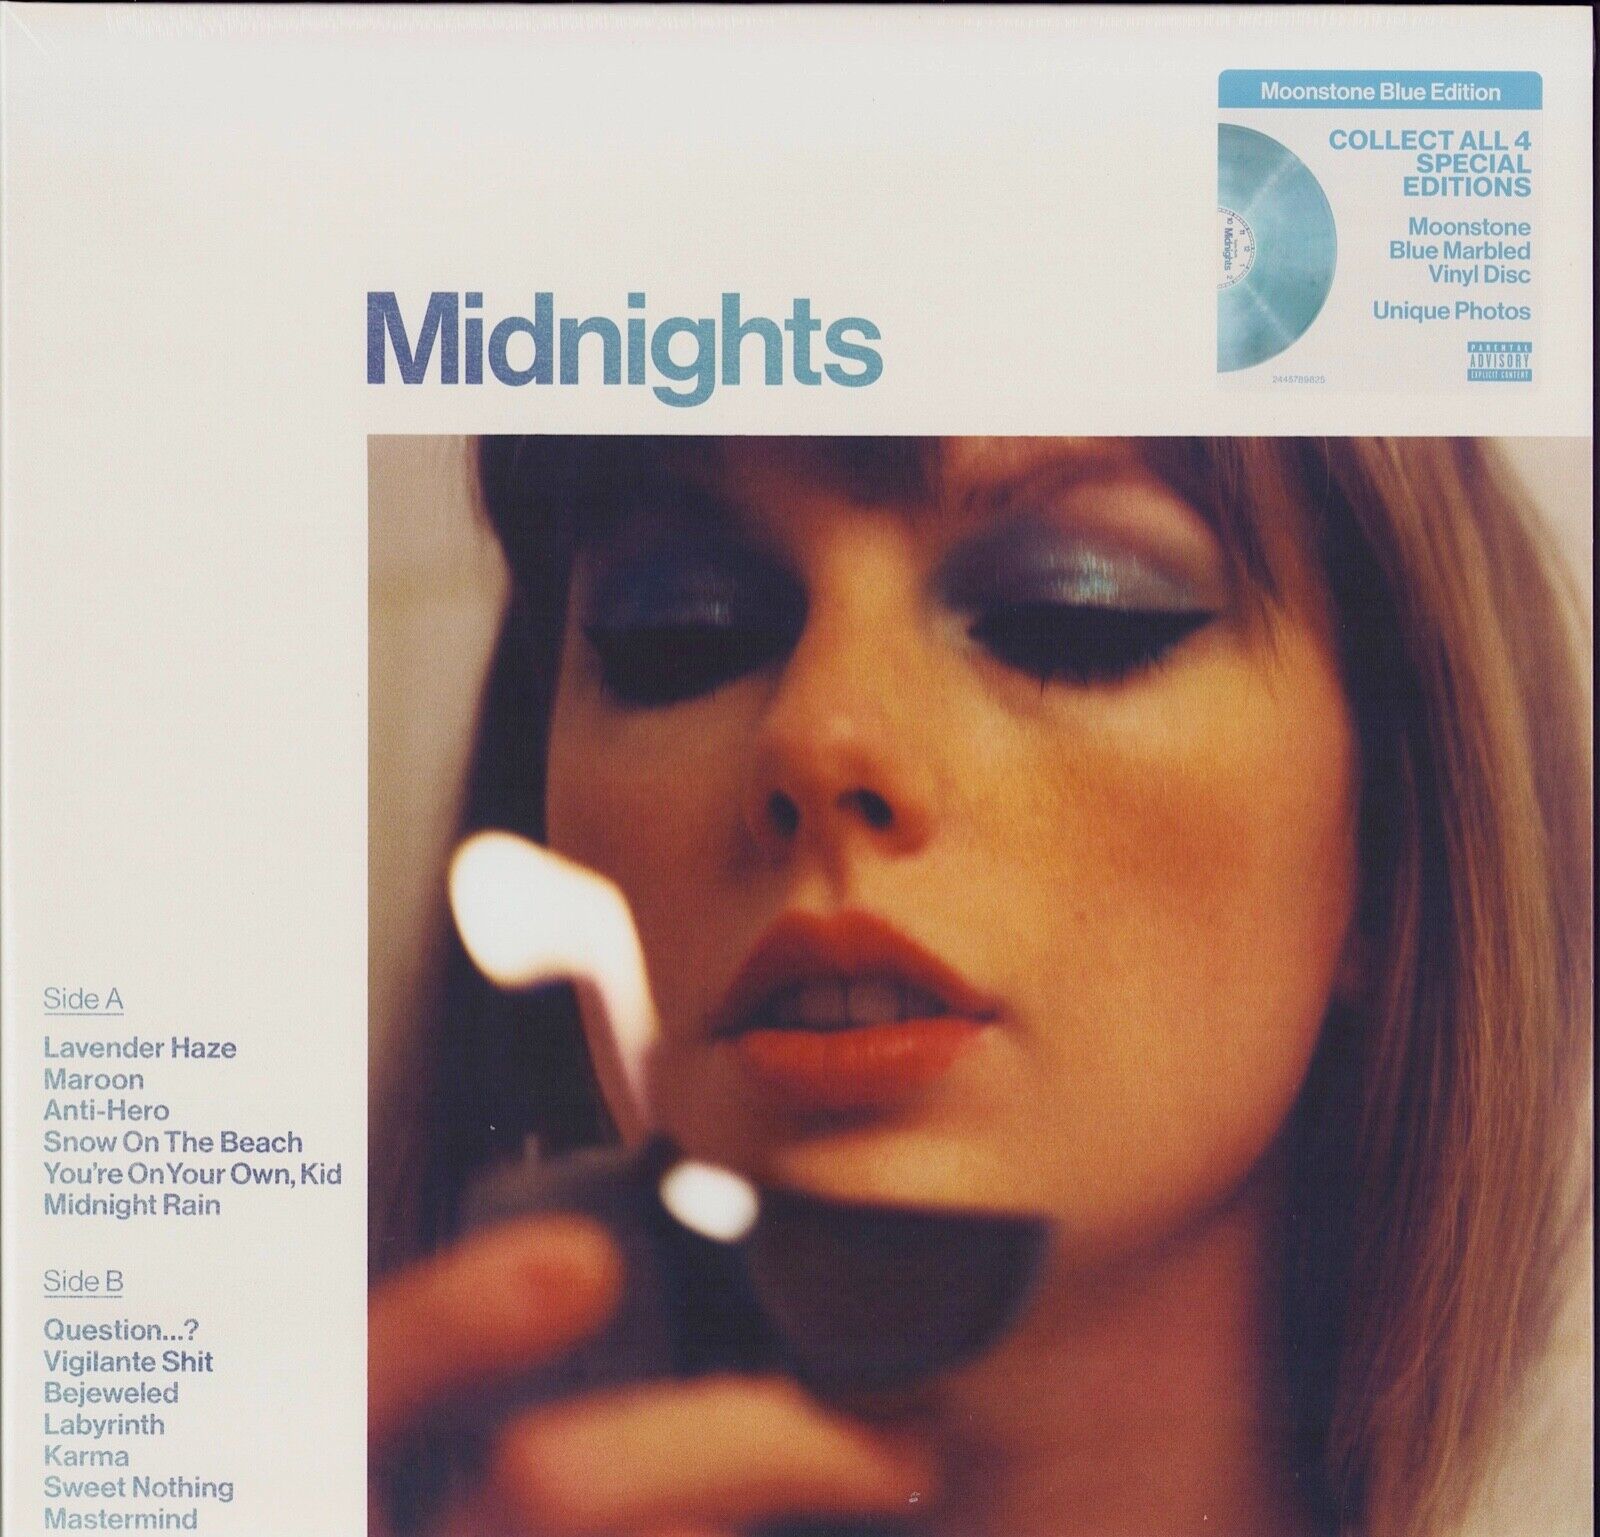 Taylor Swift ‎- Midnights Moonstone Blue Marbled Vinyl LP Special Edition